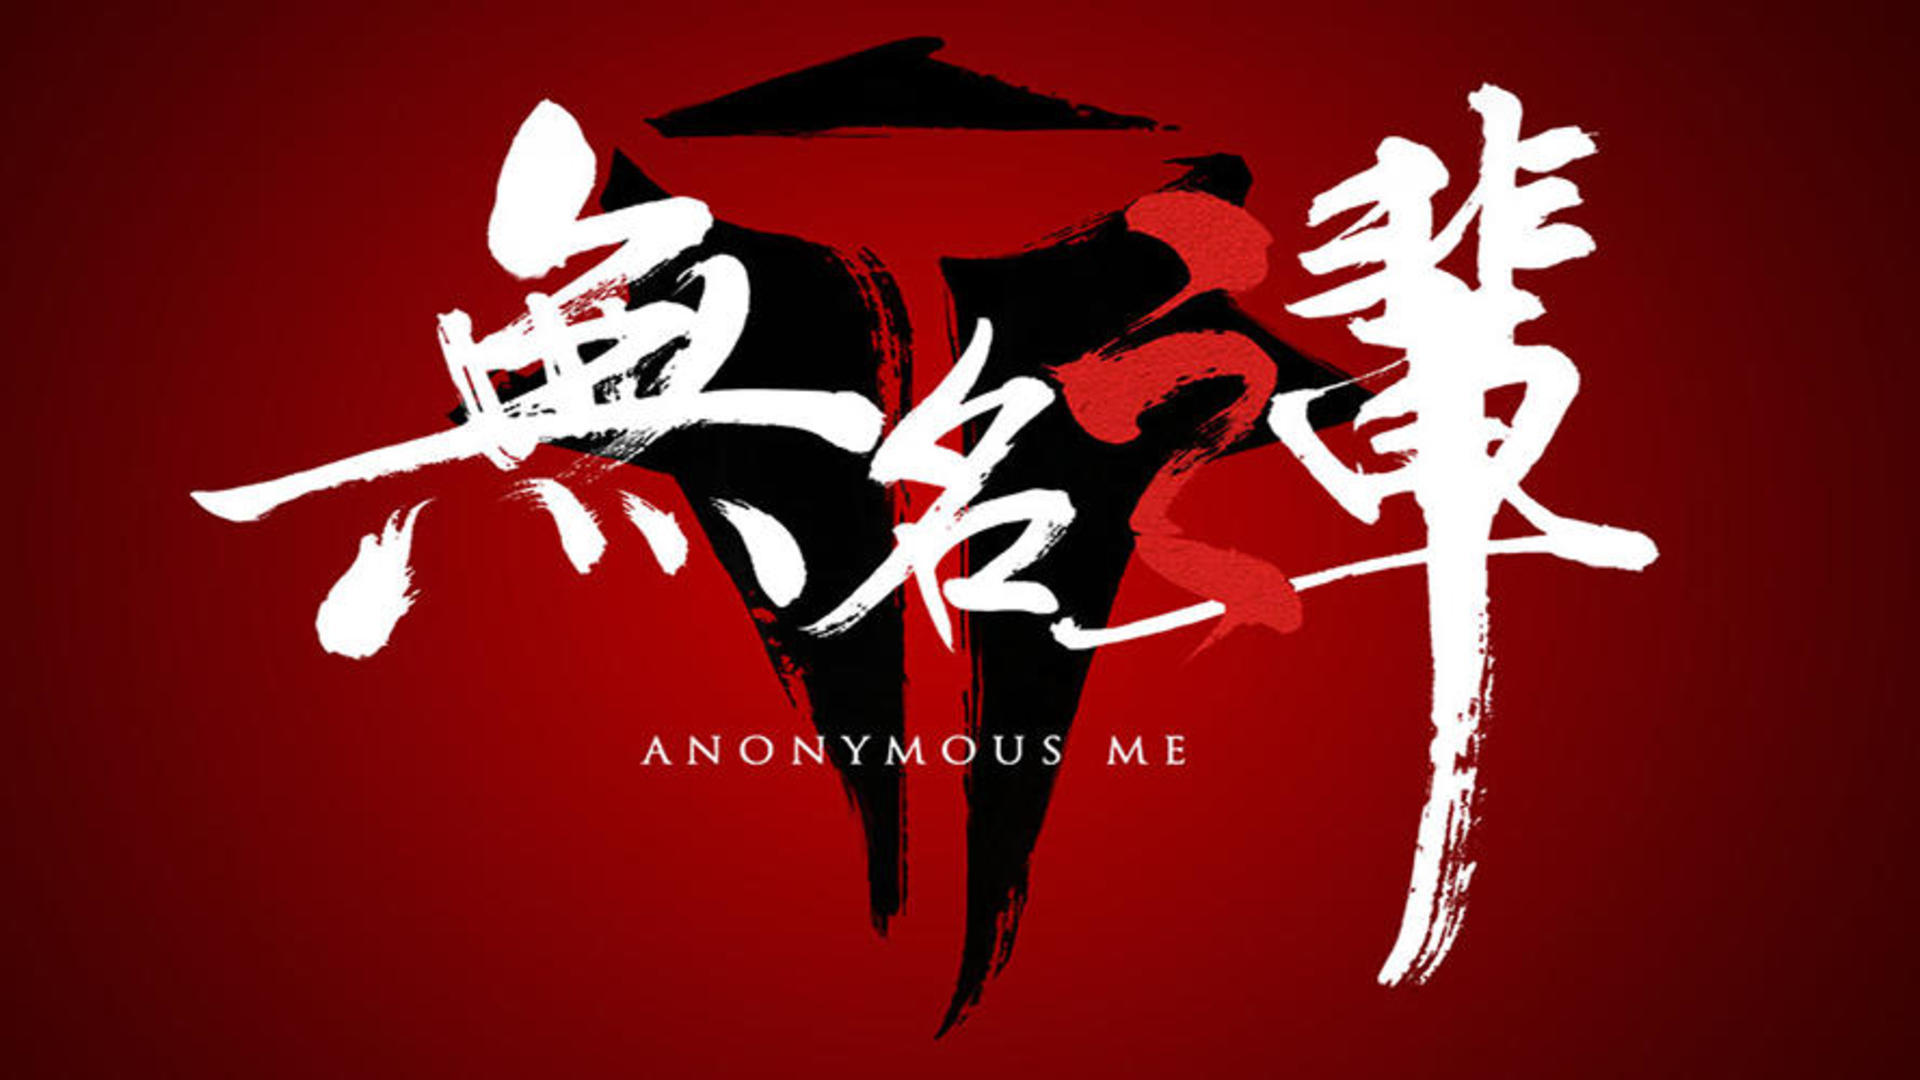 Banner of Eu anônimo (teste) 